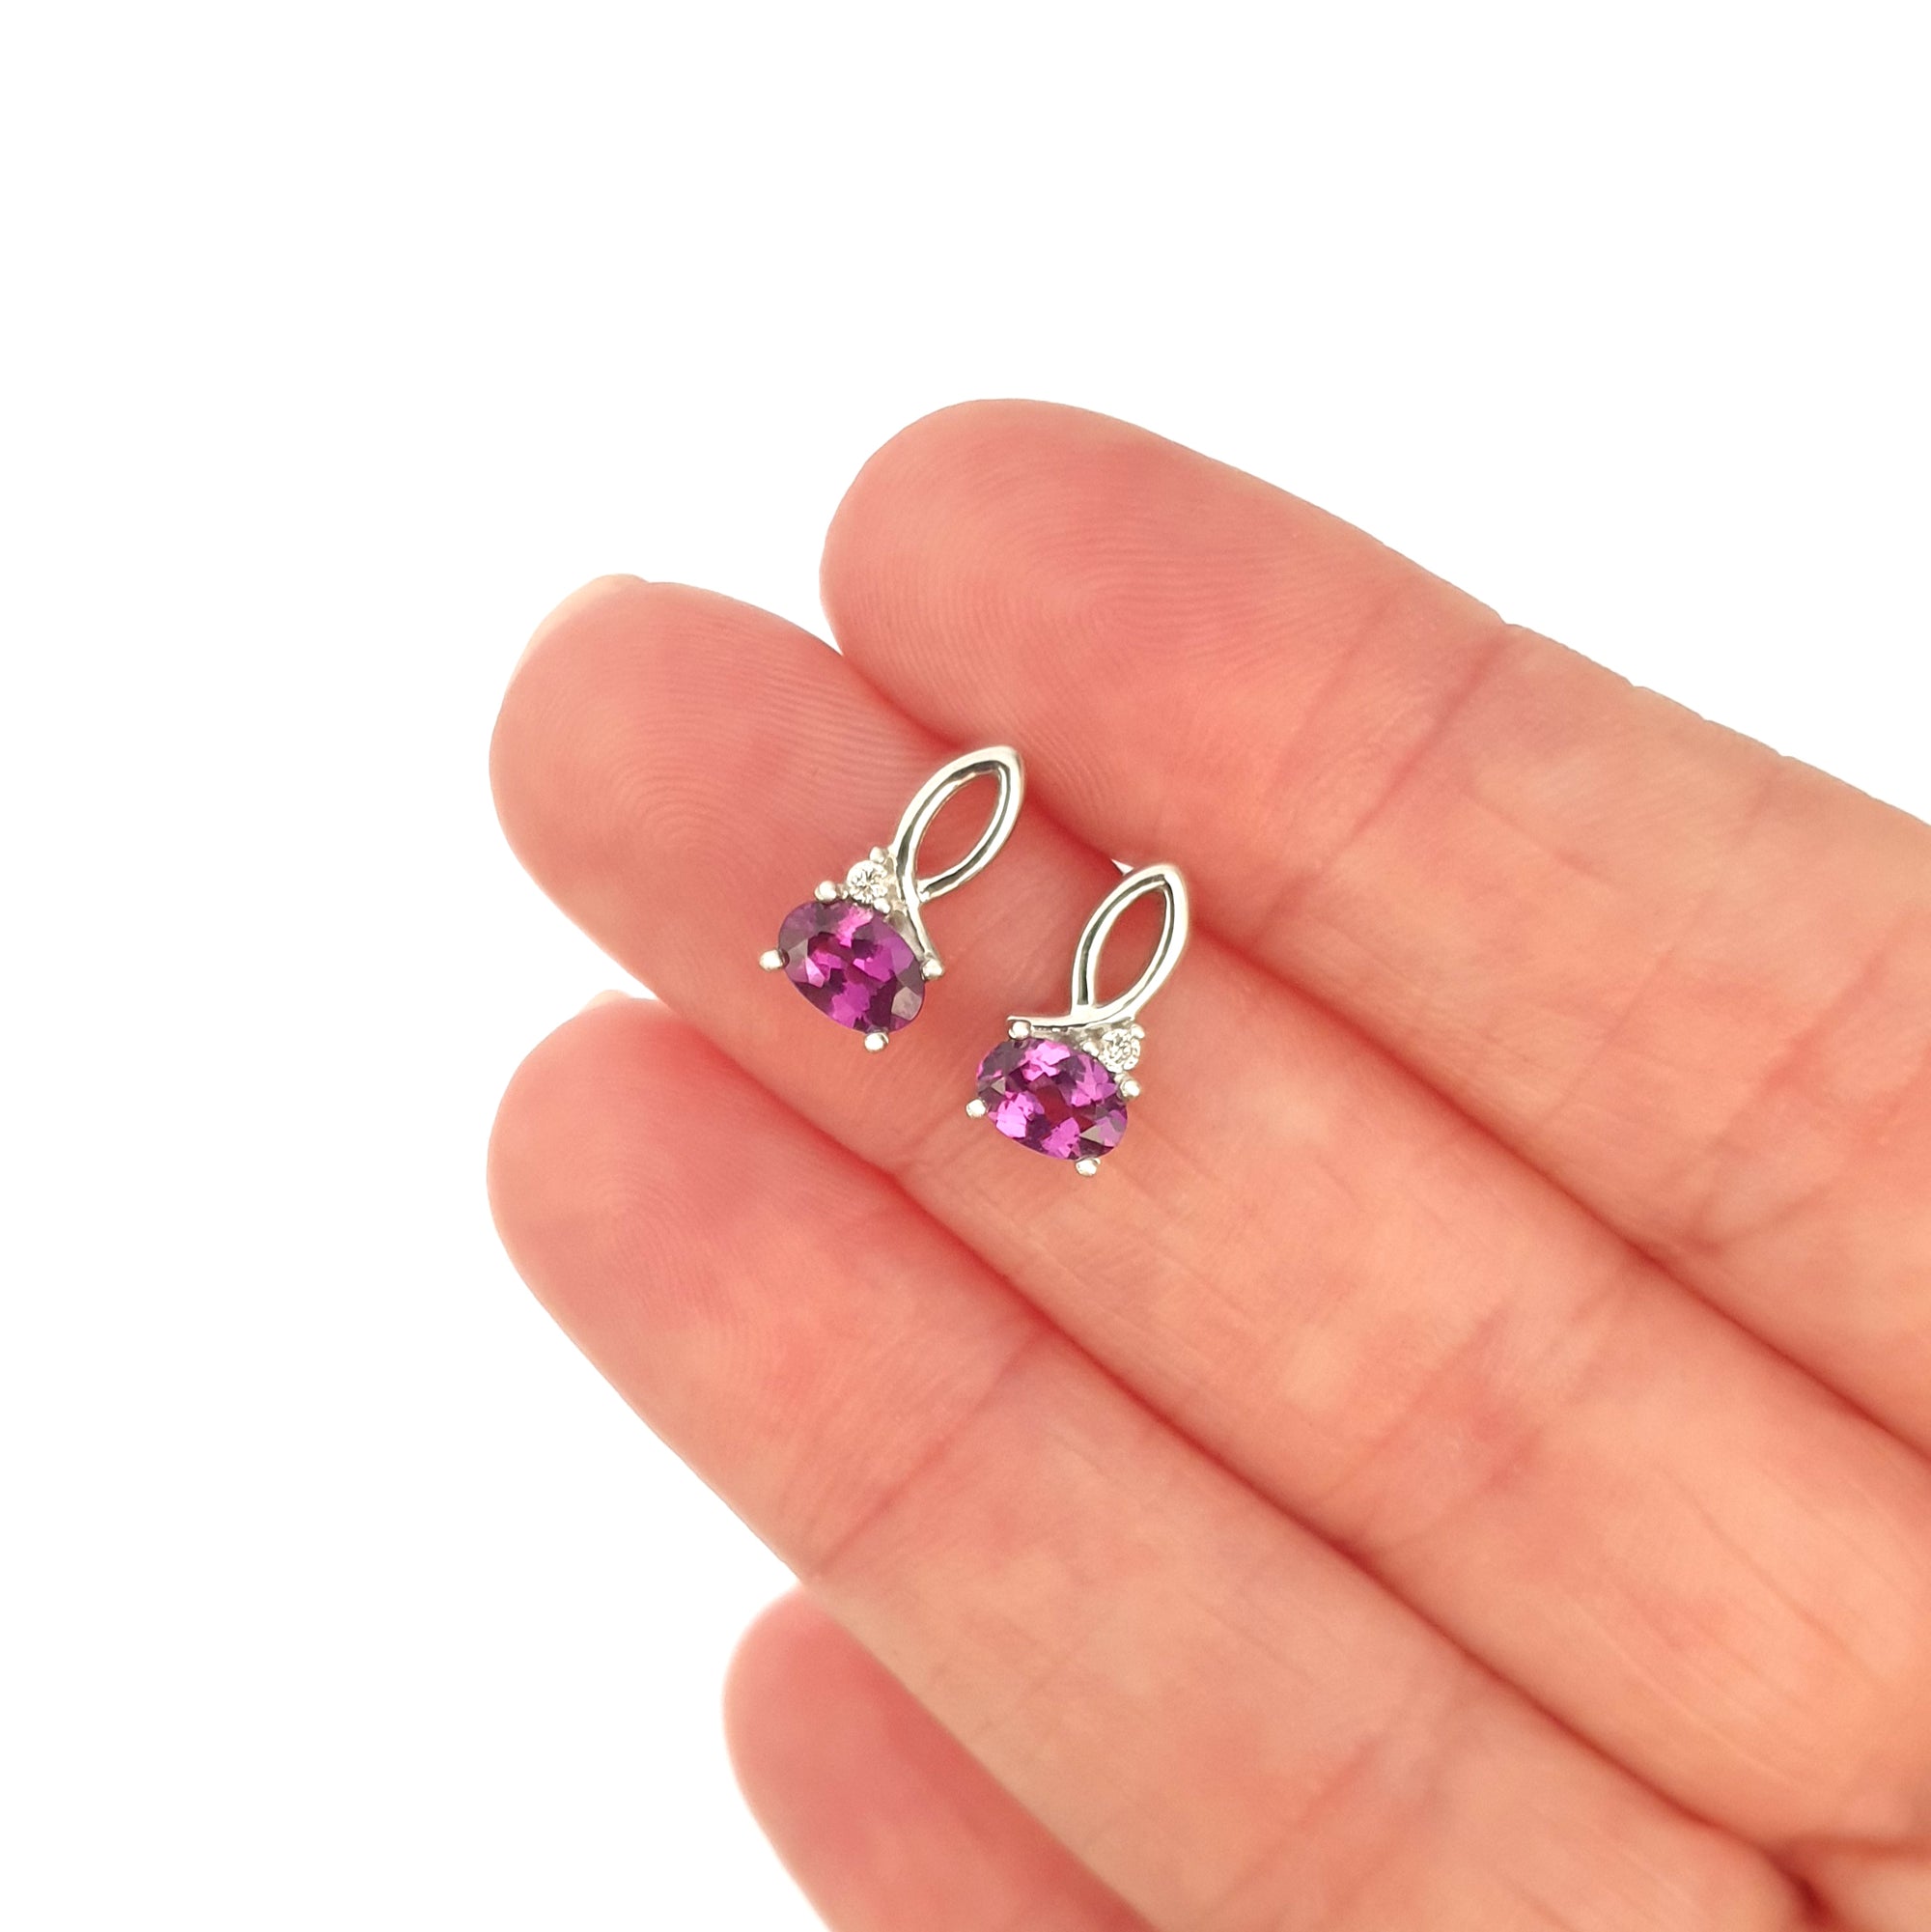 Half Bow Grape Garnet and Diamond Earrings